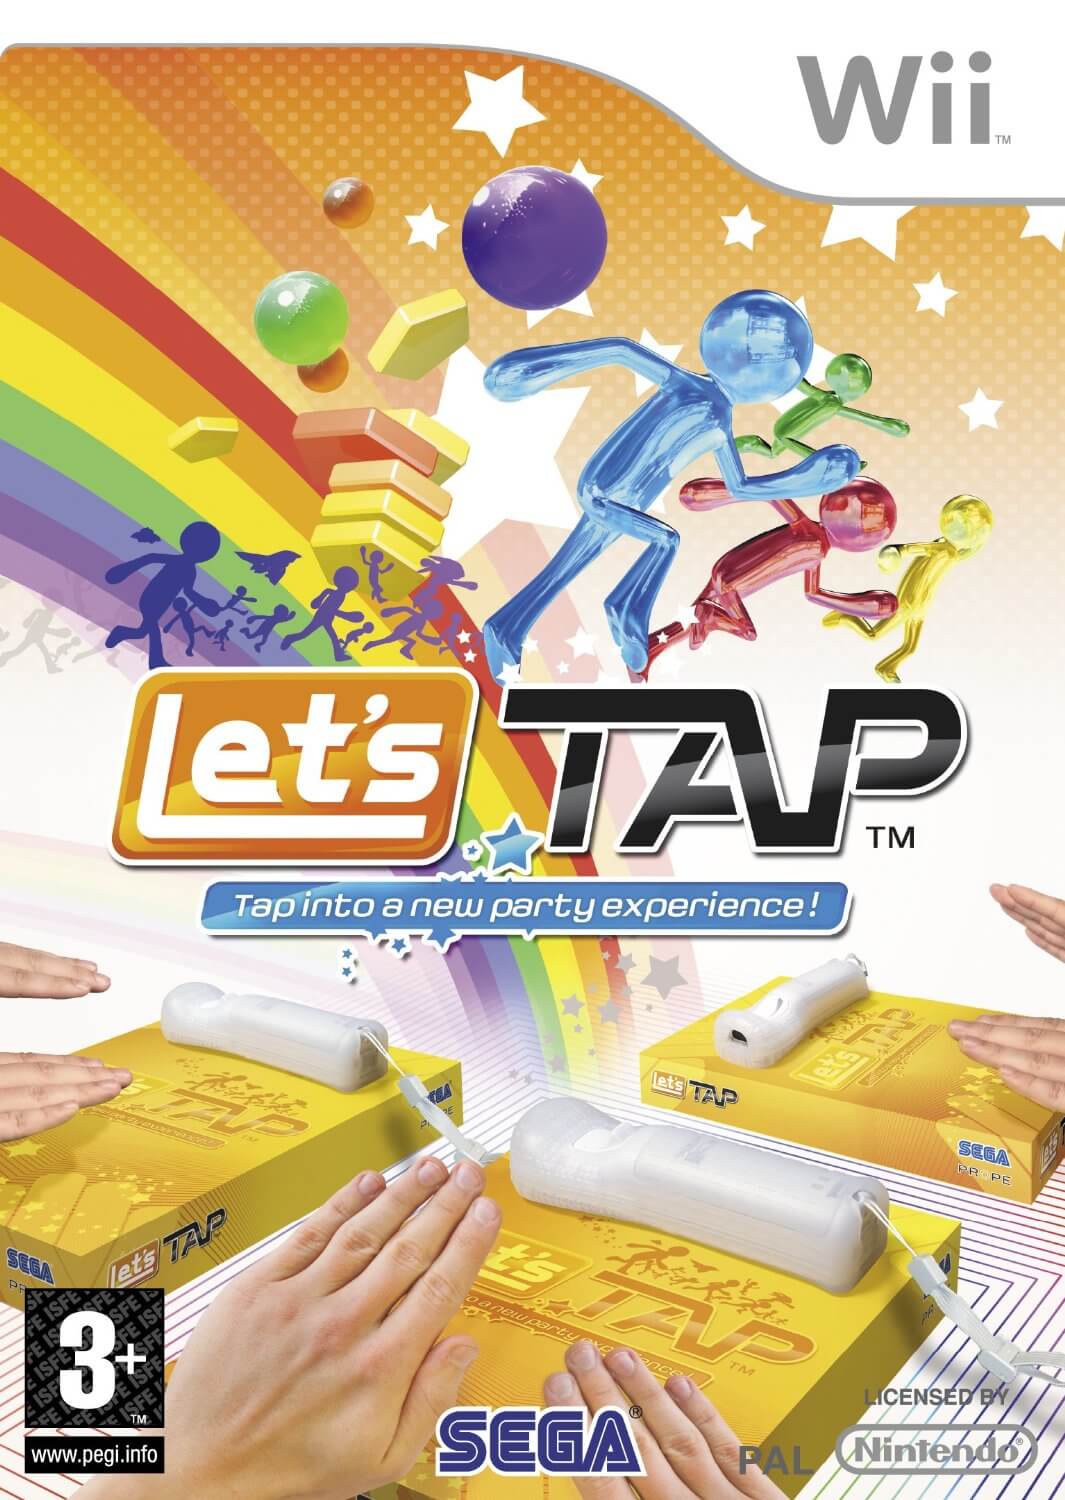 Let’s Tap